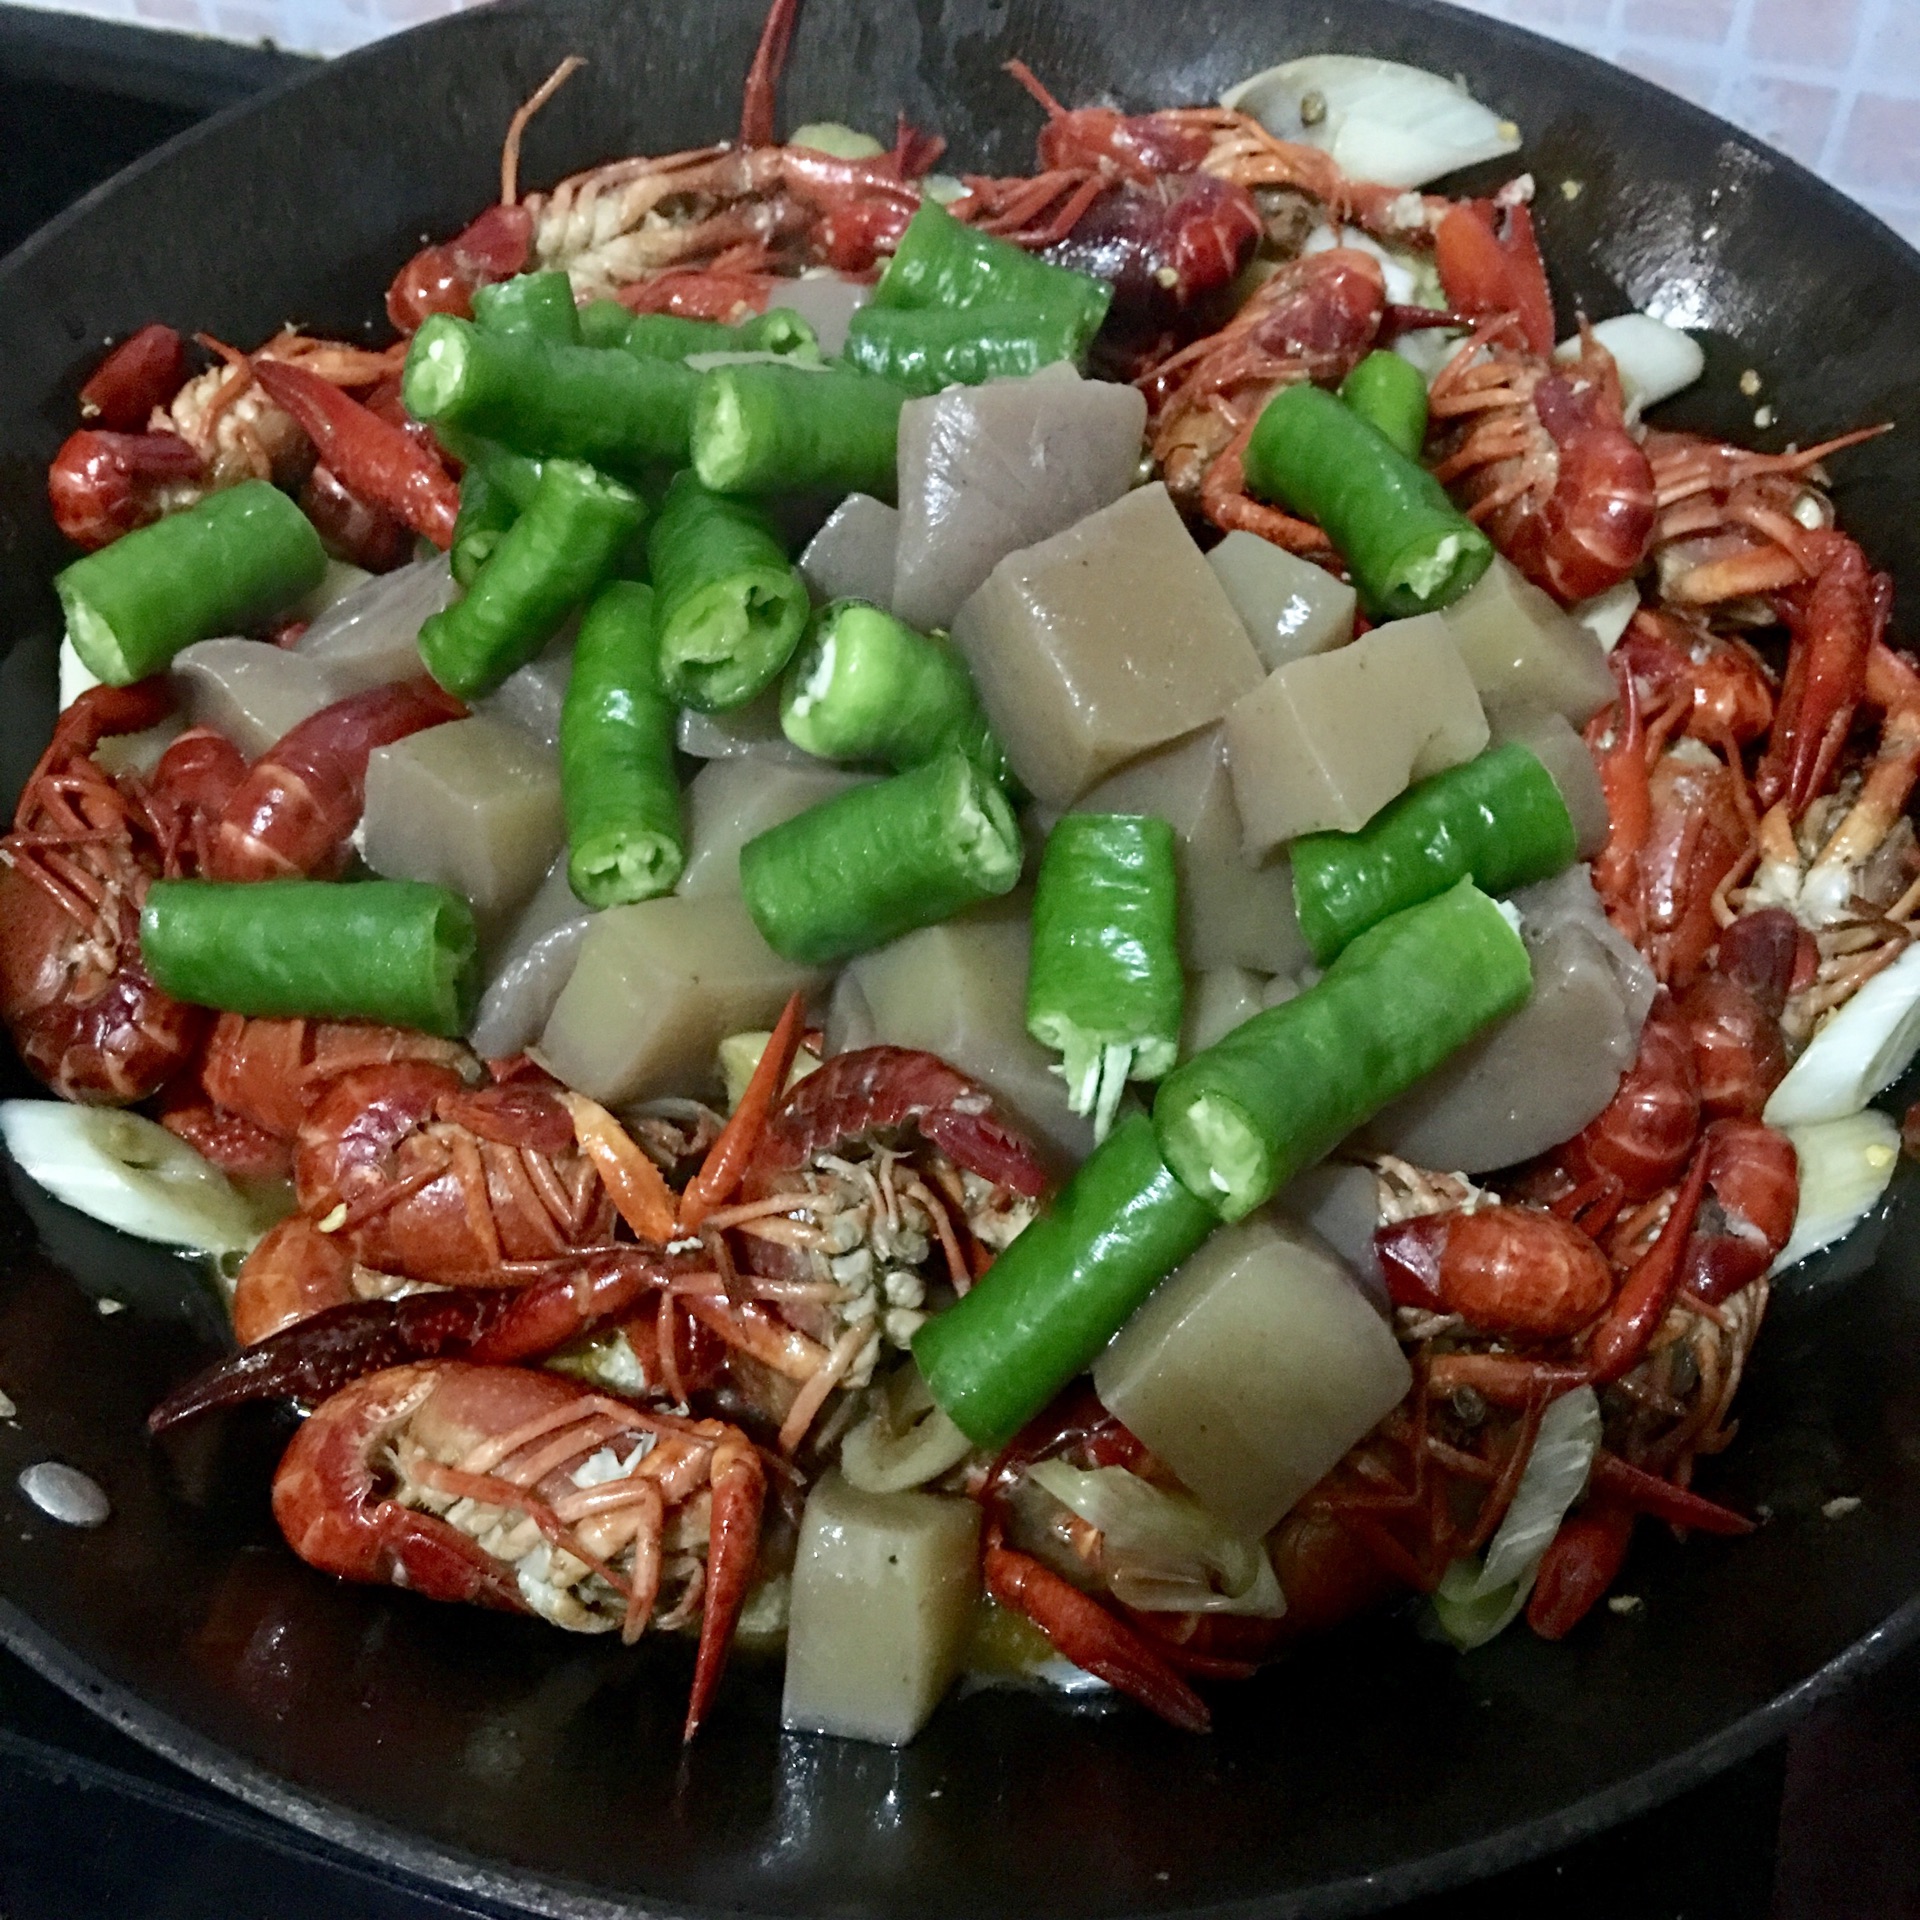 麻辣小龙虾正确做法，步骤简单，小龙虾入味又好吃_哔哩哔哩 (゜-゜)つロ 干杯~-bilibili